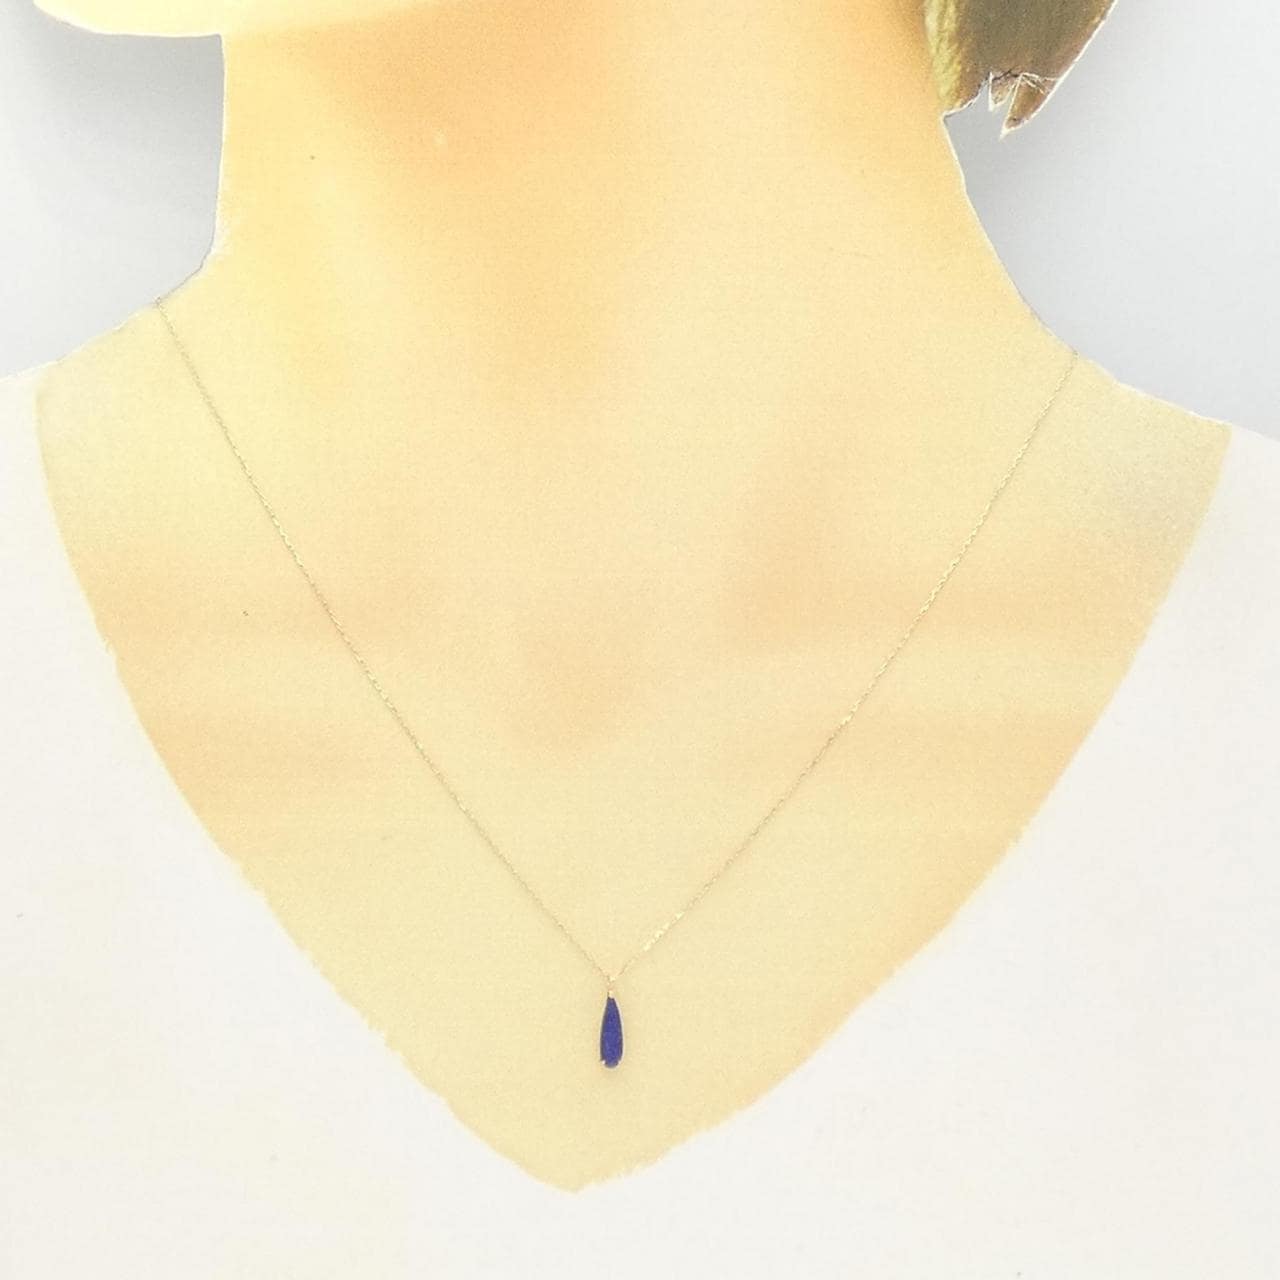 [BRAND NEW] K10YG Lapis Lazuli Necklace